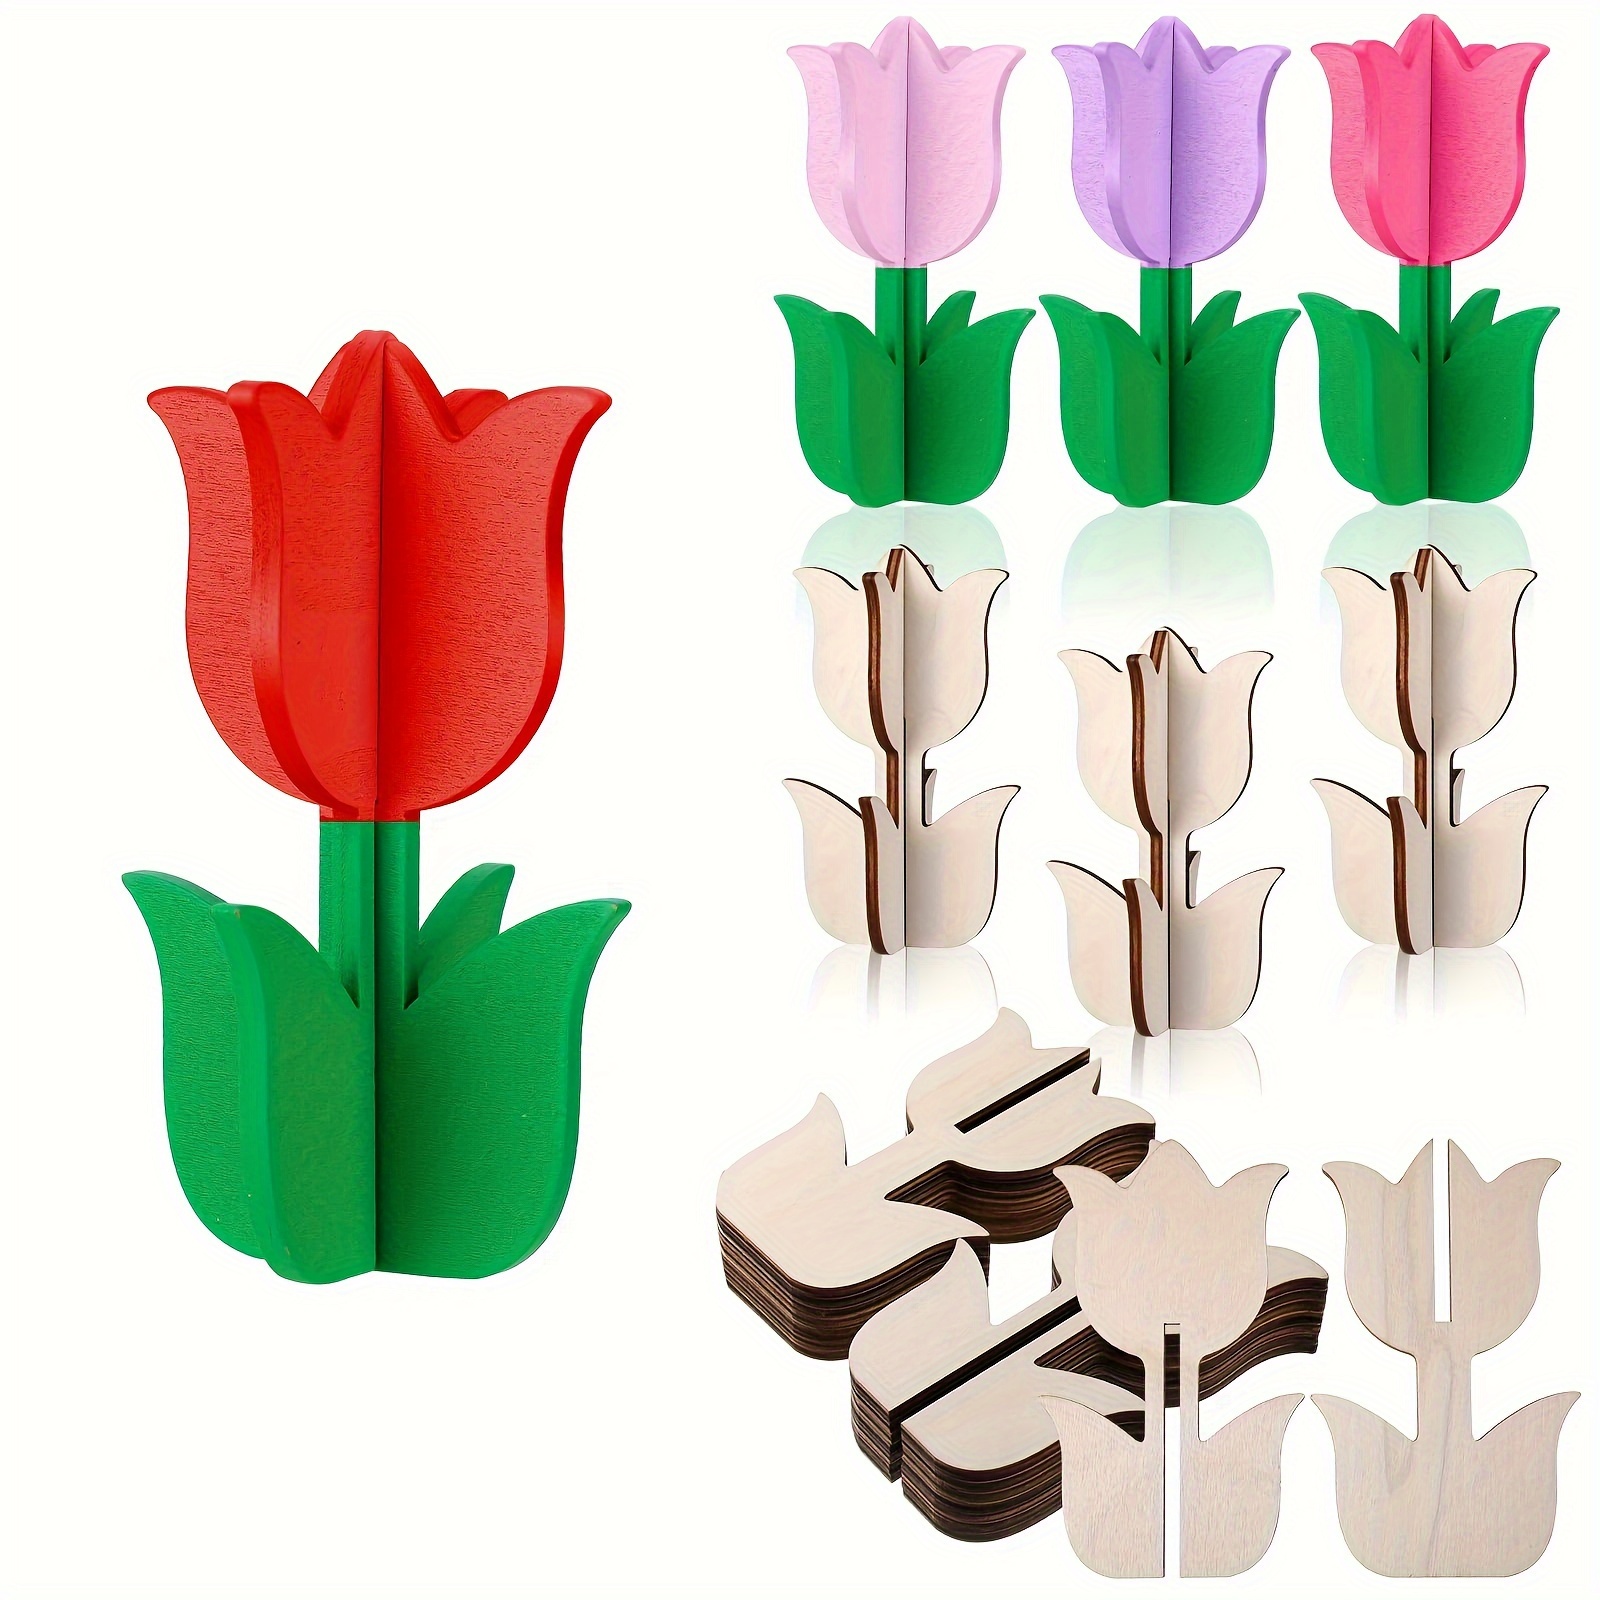 

12 Pcs Unfinished Wood Tulip Cutouts - 3d Paintable Flower Slices For Diy Crafts, Home Decor, Party Favors